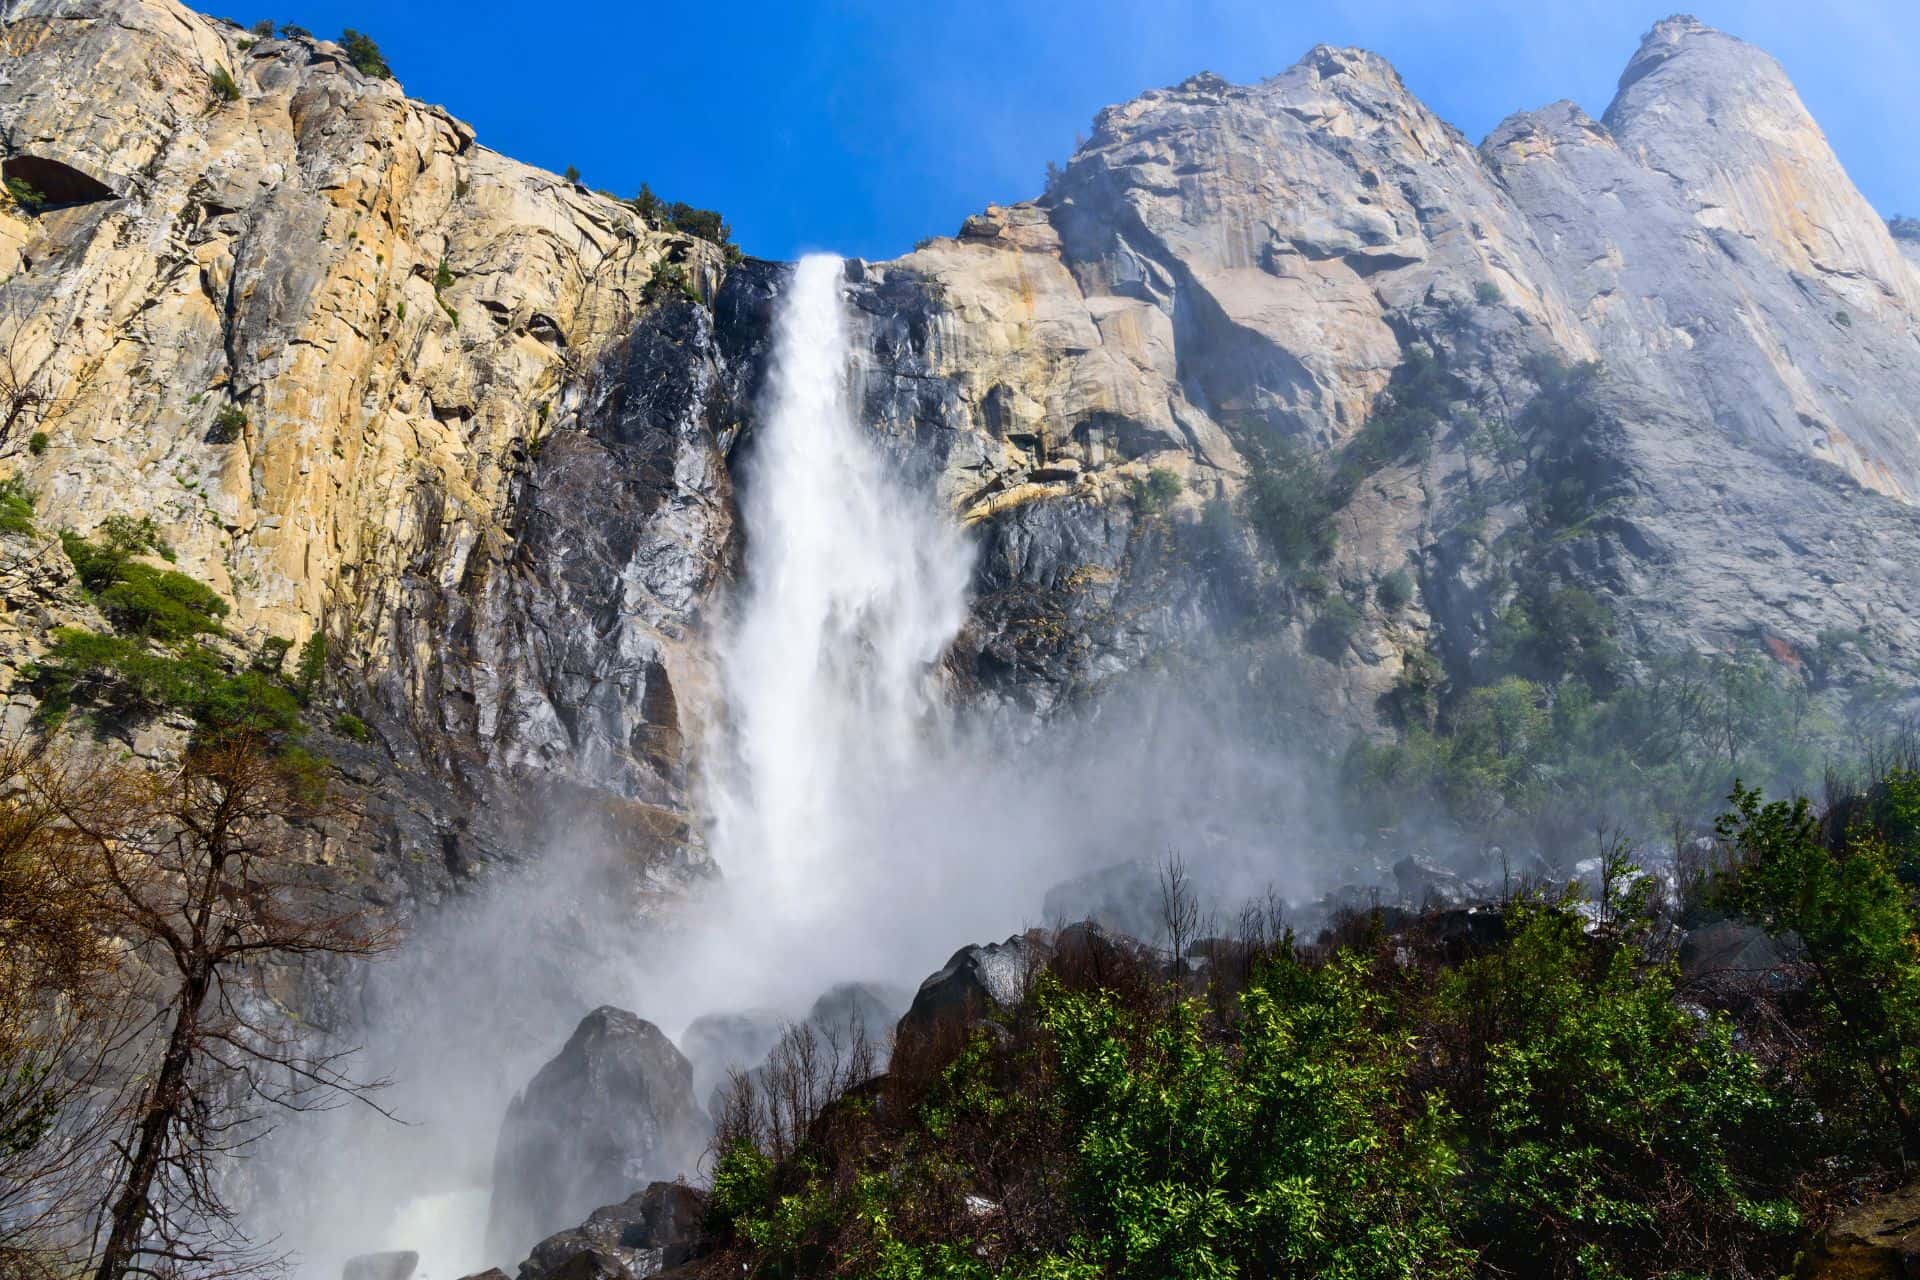 Bridalveil Fall in Yosemite